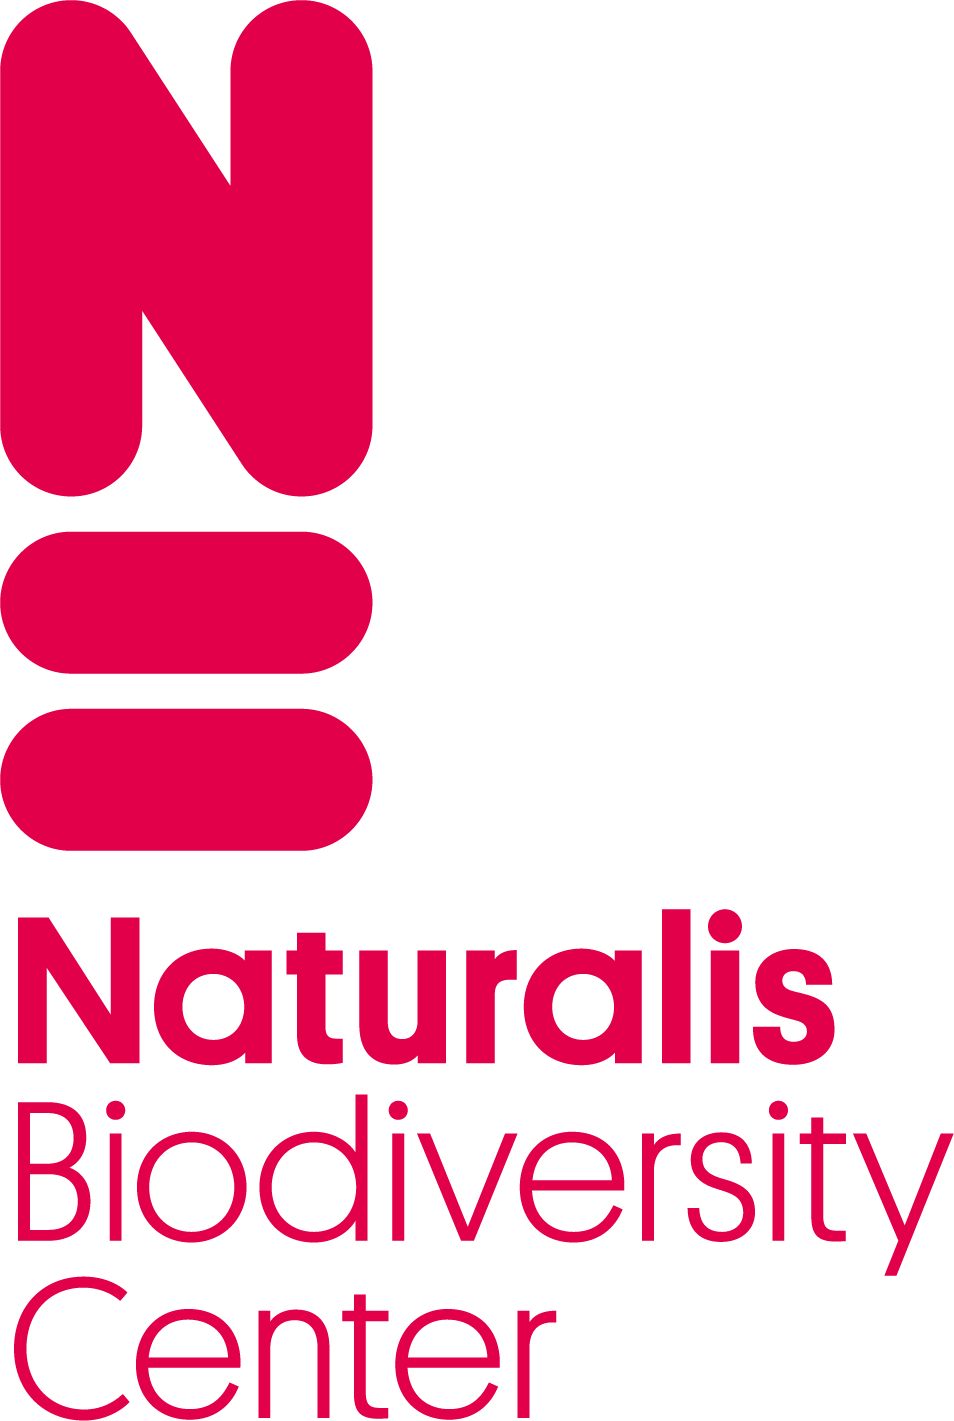 Naturalis Biodiversity Center